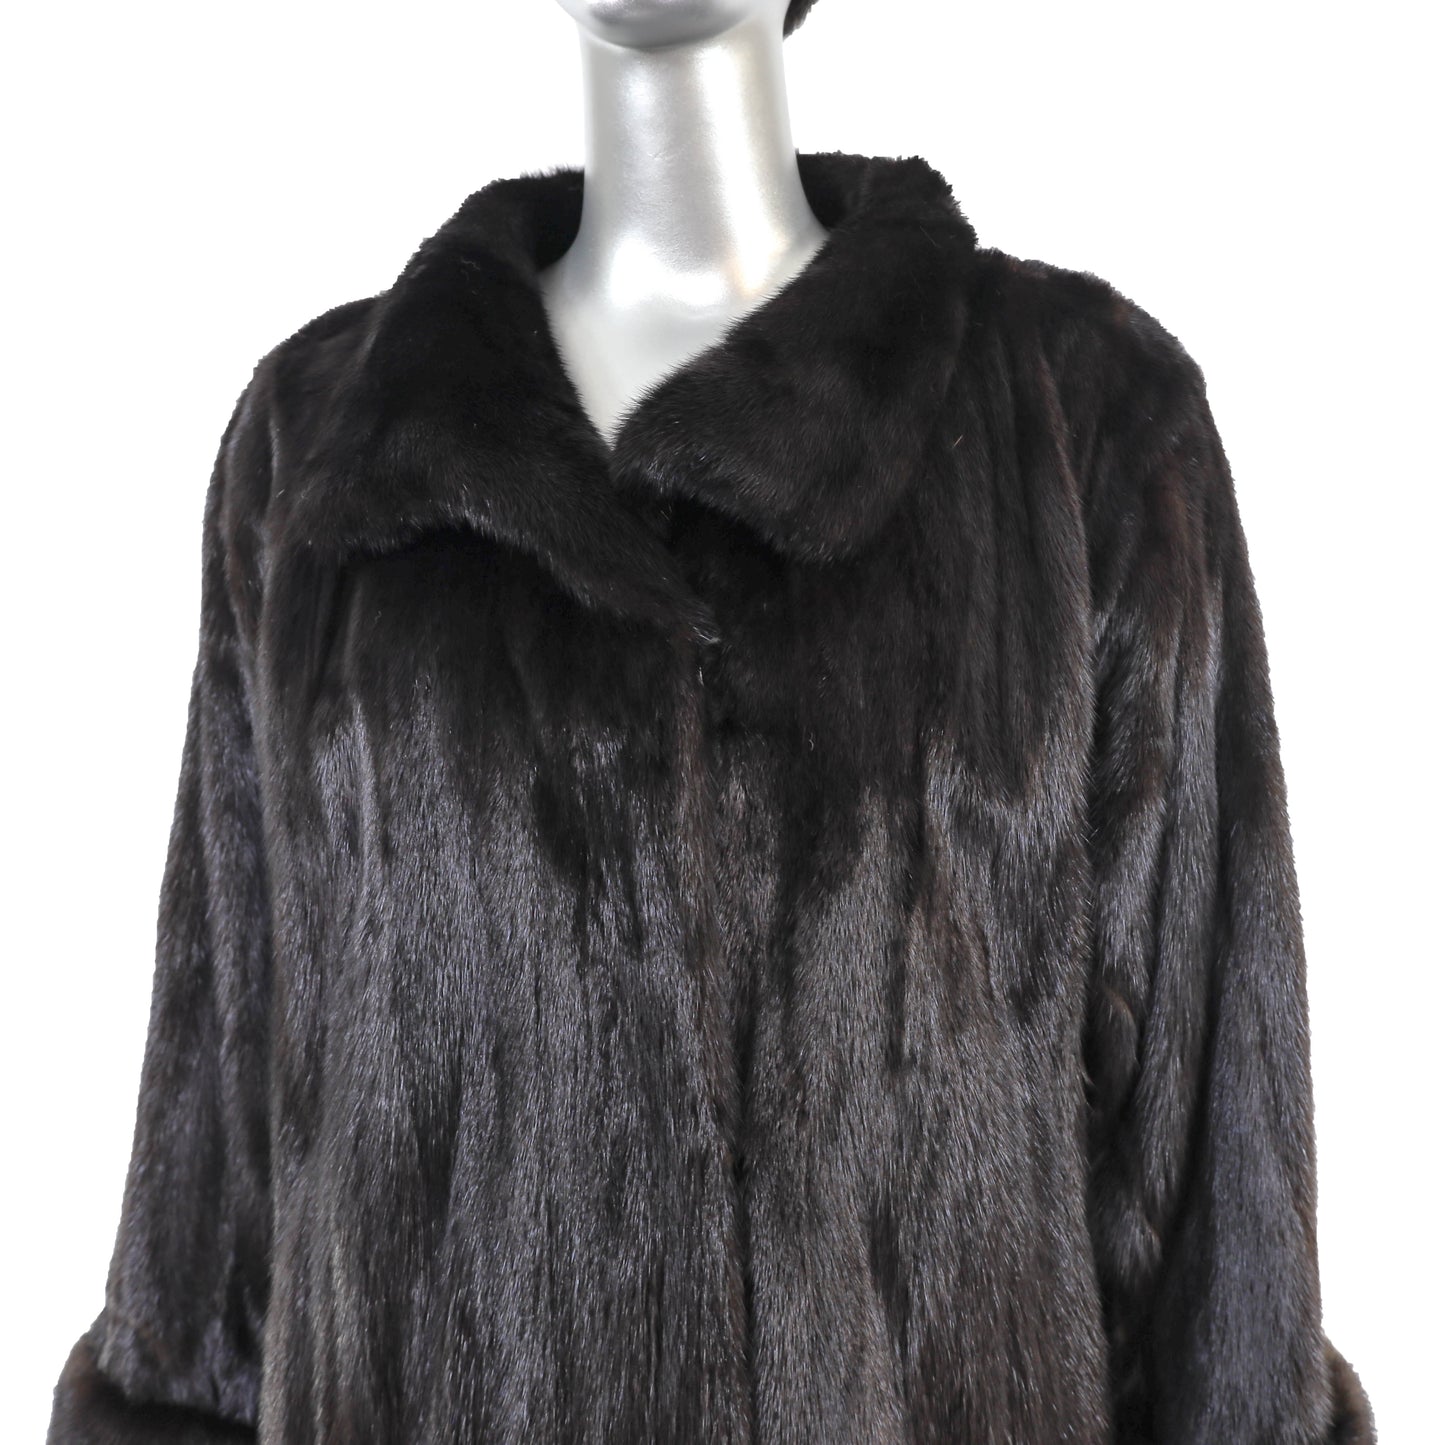 Black Mink Coat with Matching Headband- Size L